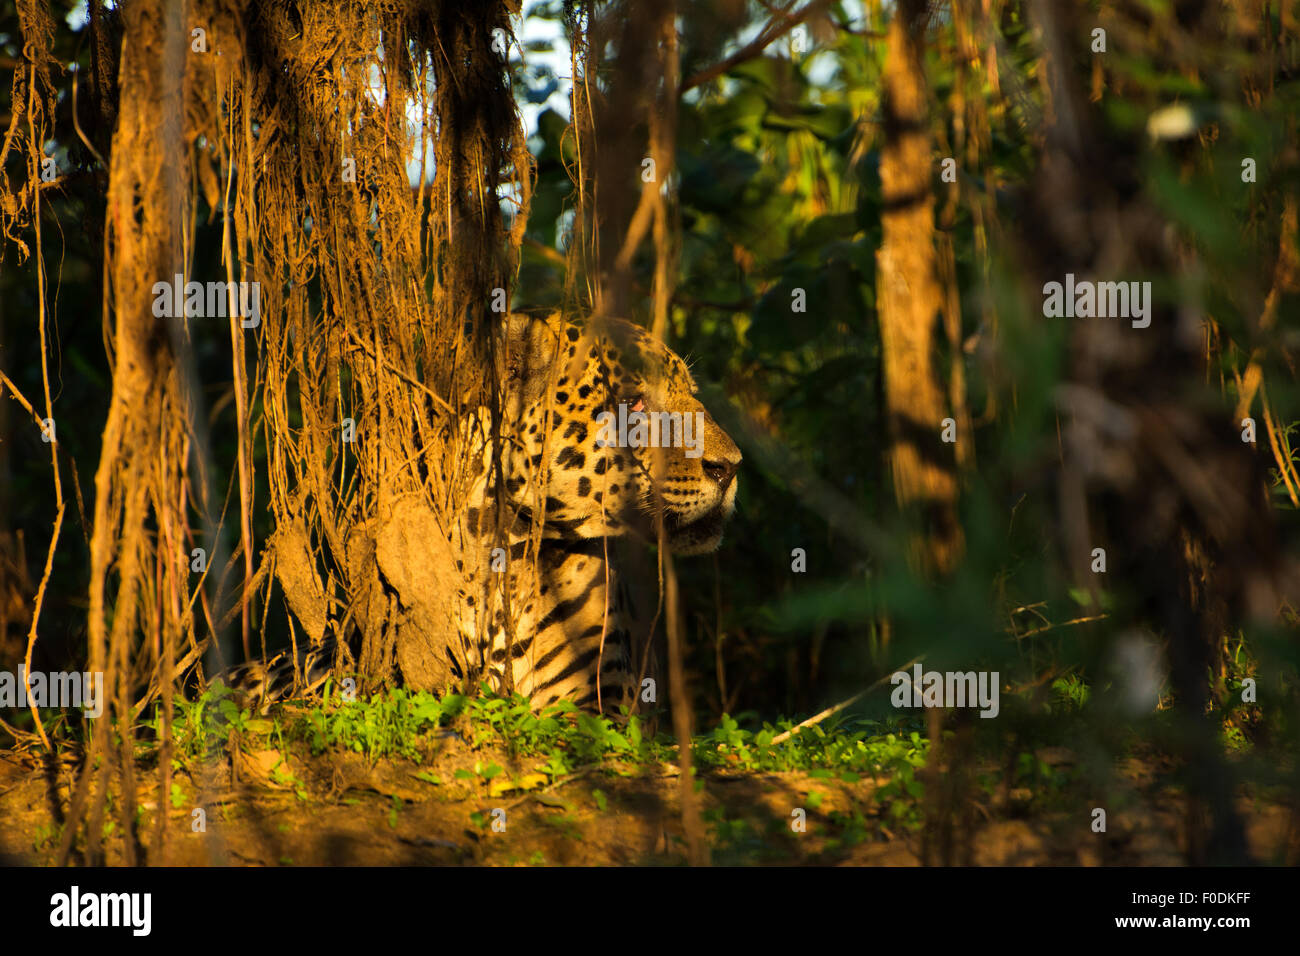 Jaguar (Panthera onca) die Region, die am Ufer des Flusses Três Irmãos im Landgut Mato Grosso liegt, wird Pantanal genannt. Stockfoto